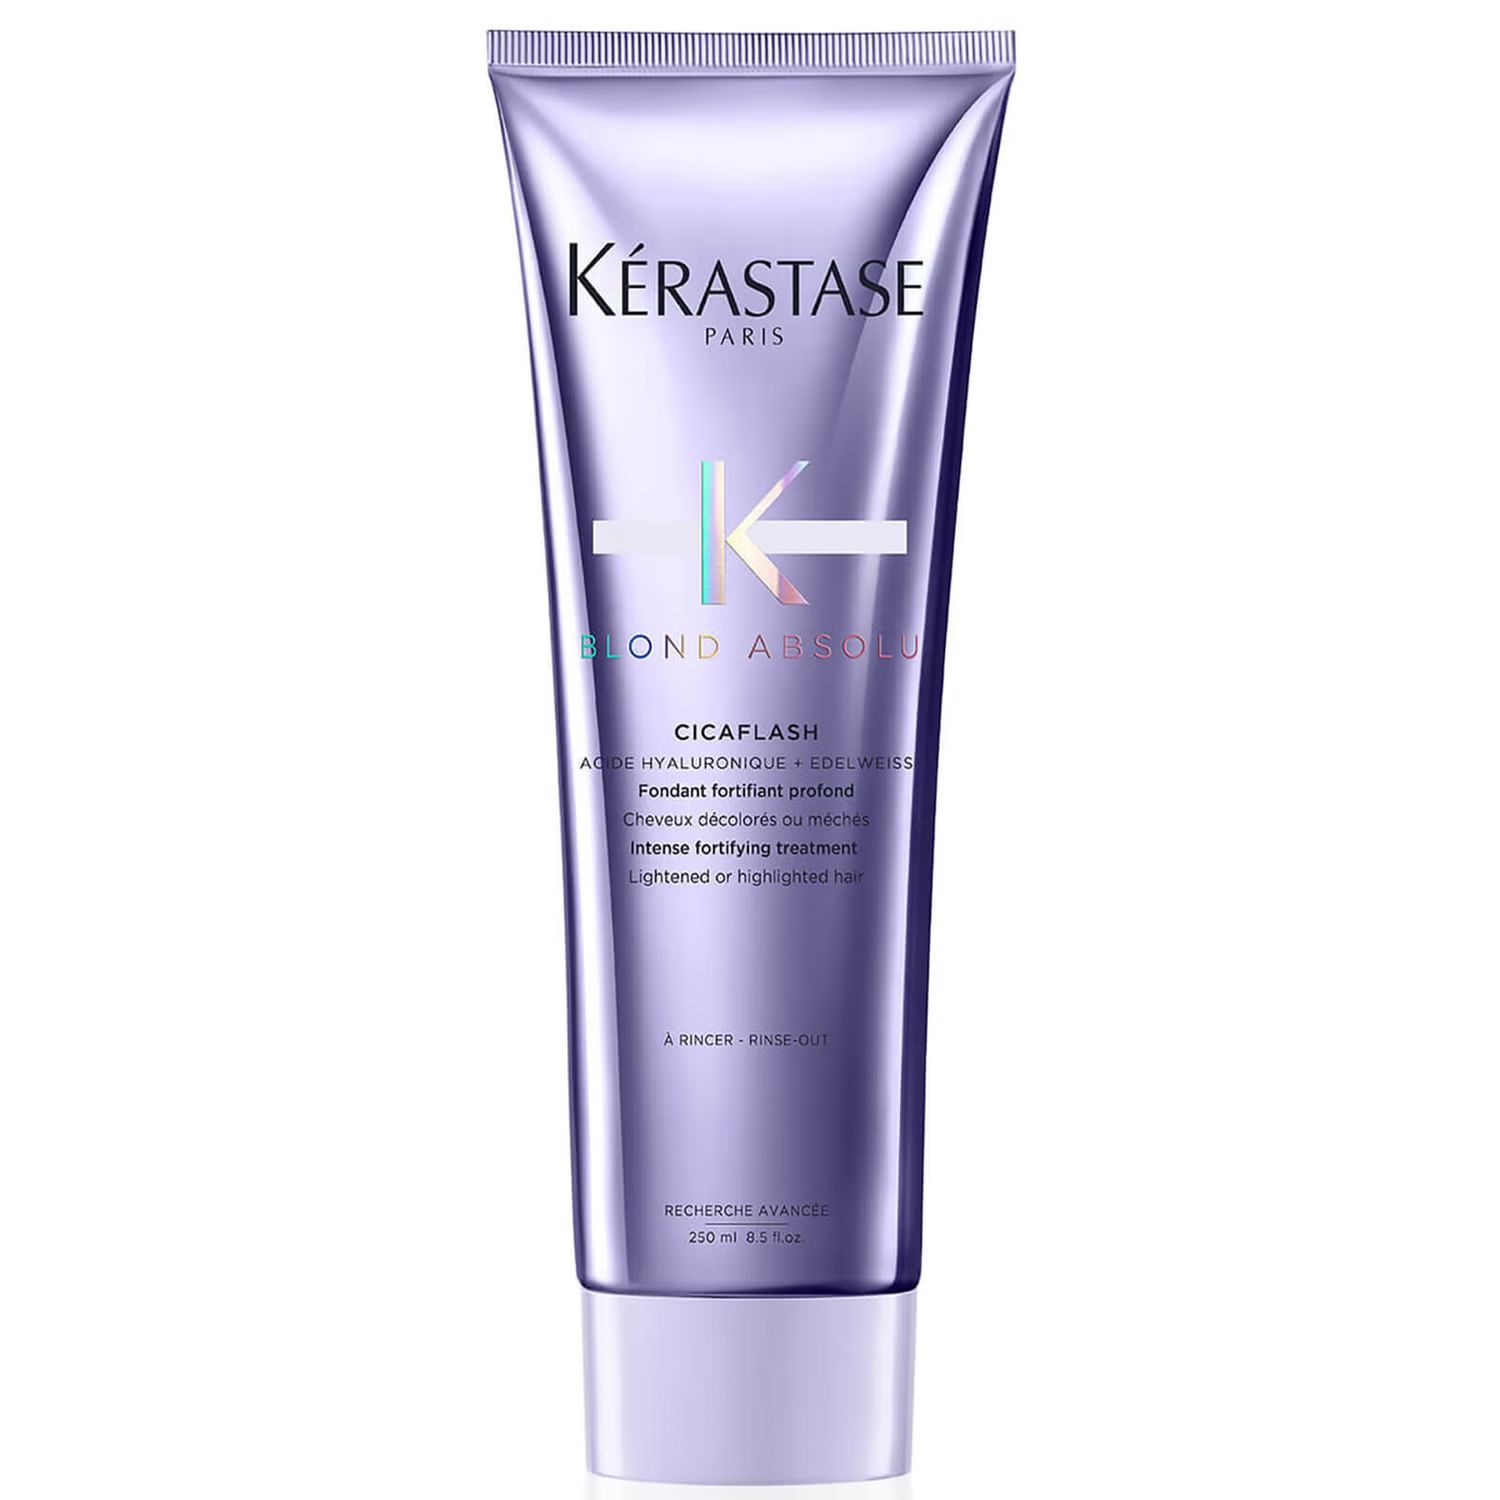 Kérastase Blond Absolu Cicaflash Treatment 250ml | Look Fantastic (UK)